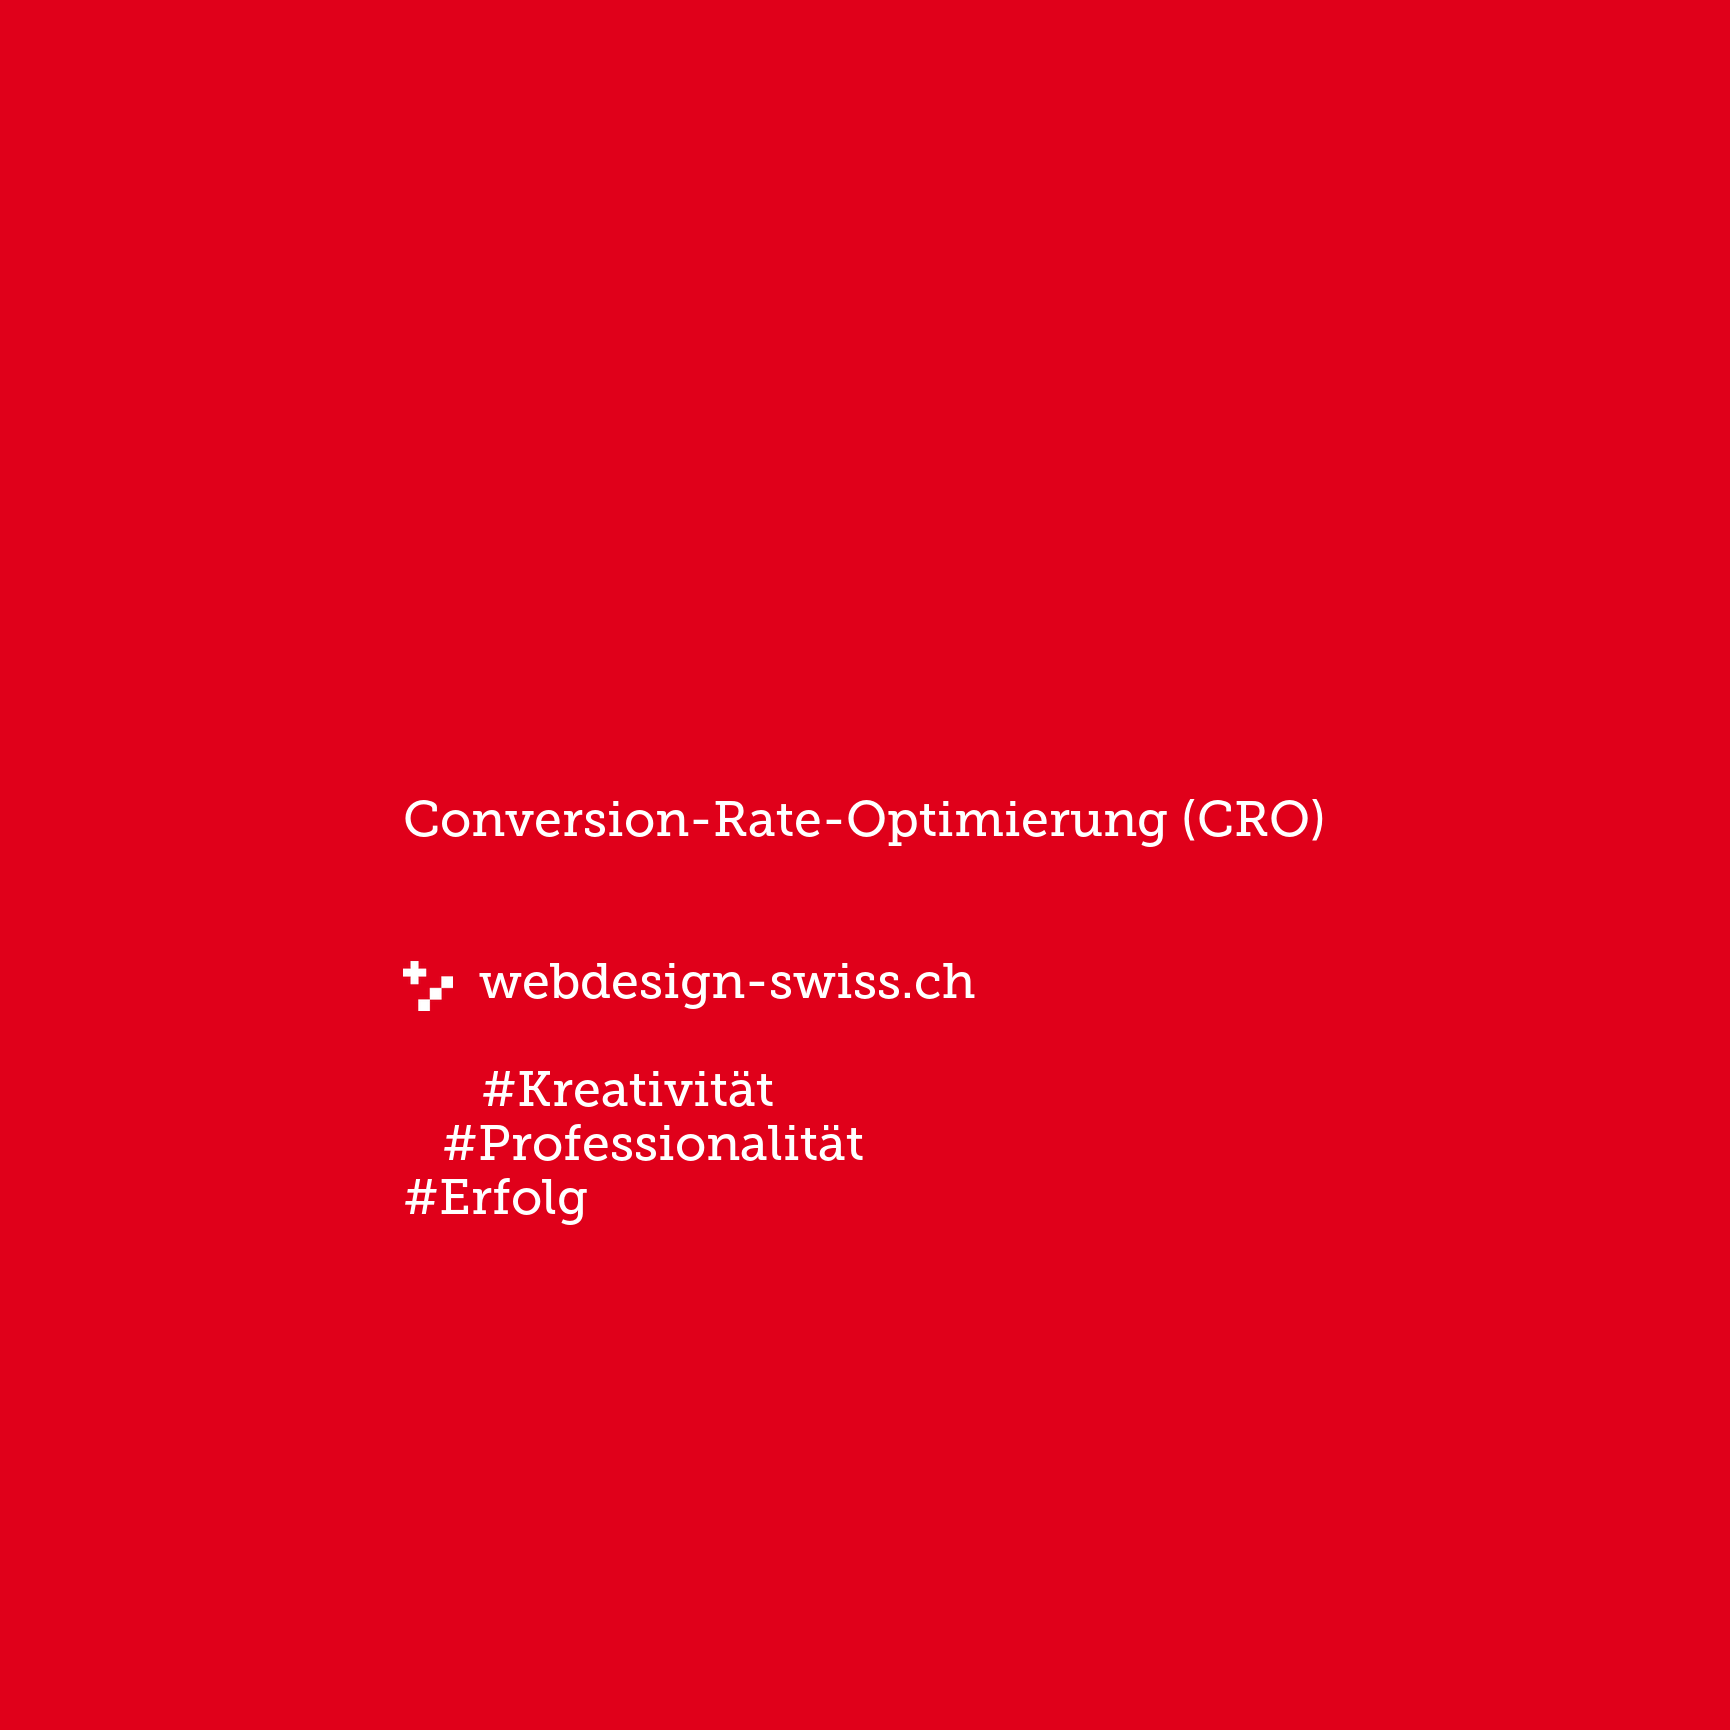 Conversion-Rate-Optimierung (CRO)